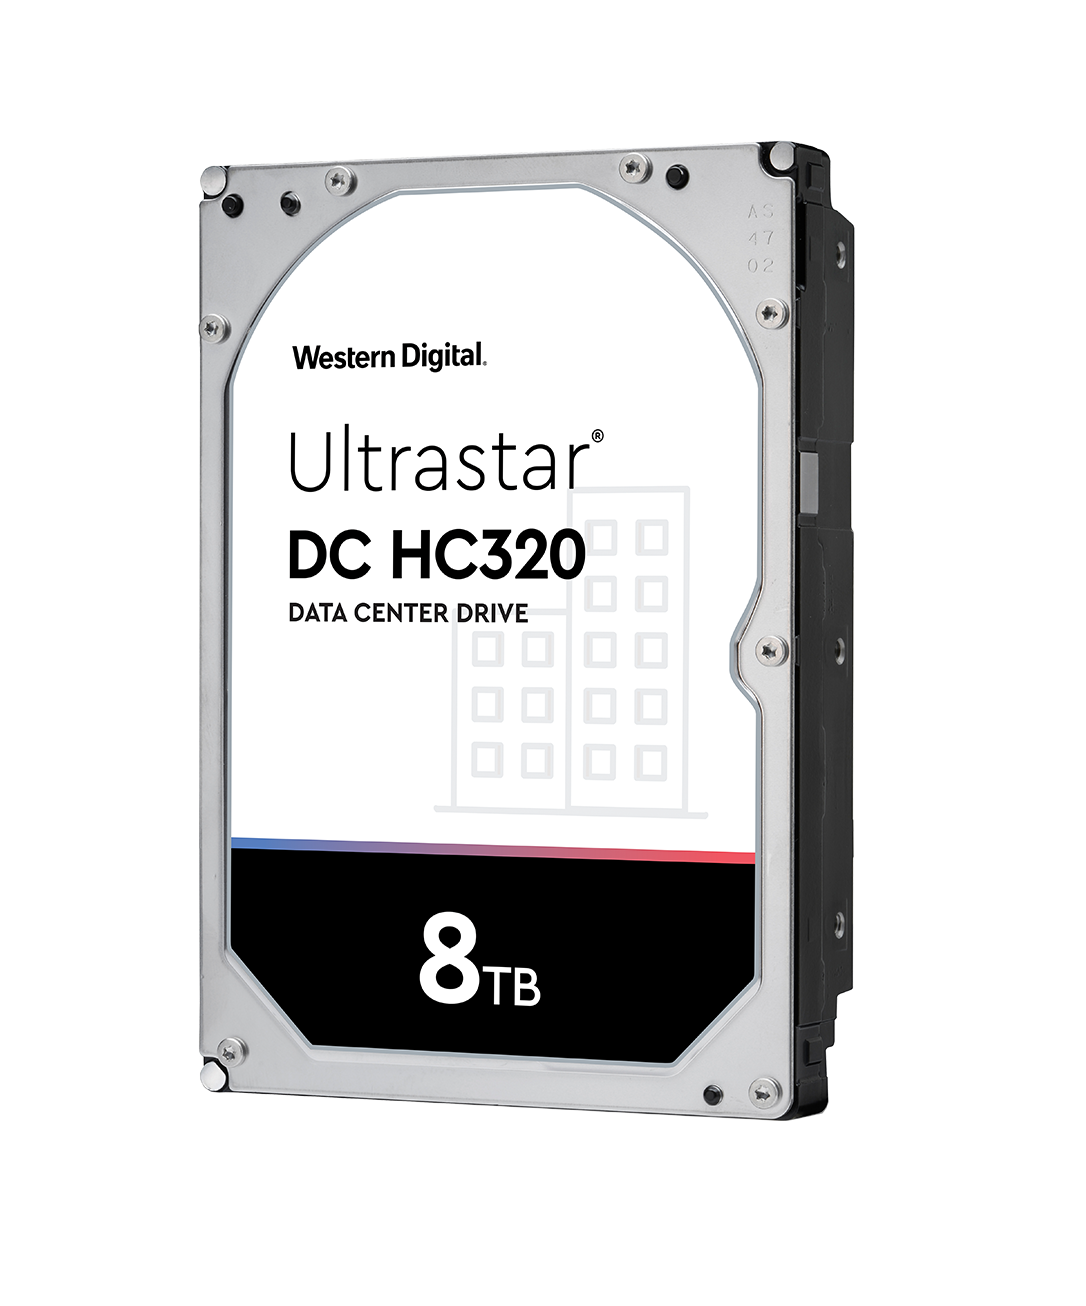 8TB Western Digital Ultrastar DC HC320 (SATA 6Gb/s) HUS728T8TALE604 Power Disable Pin 3 support